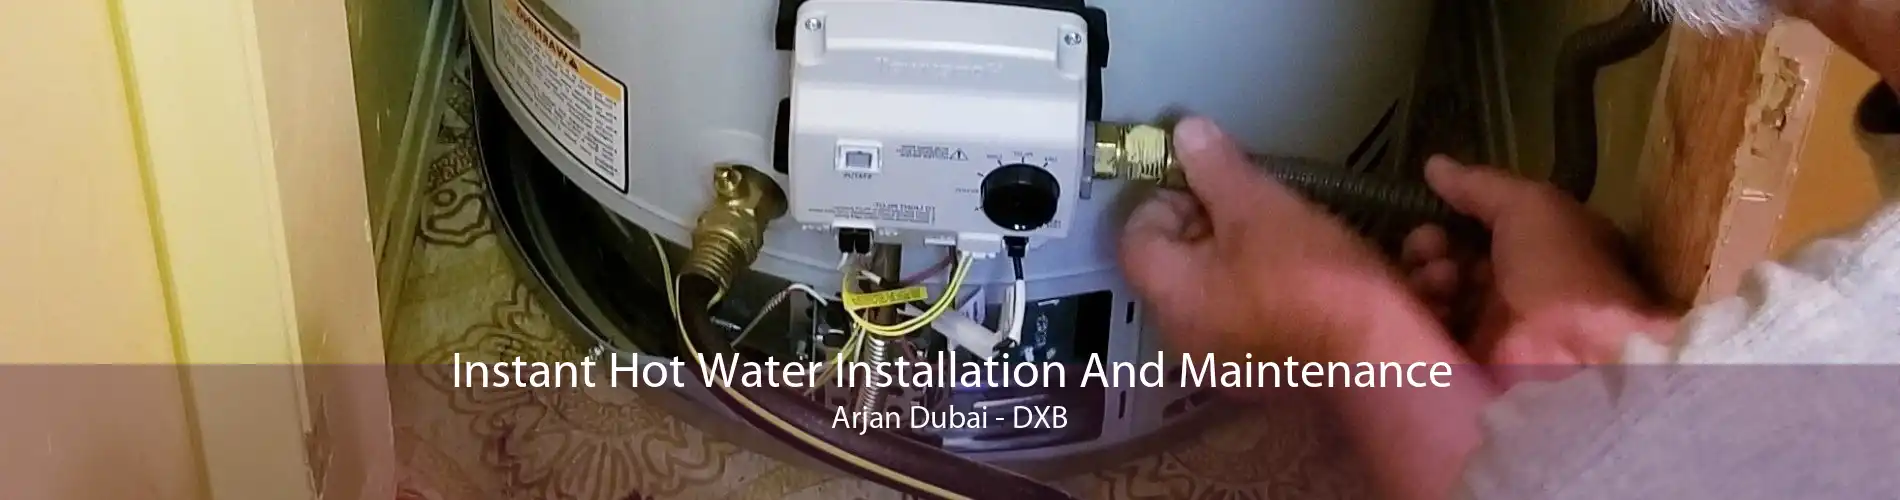 Instant Hot Water Installation And Maintenance Arjan Dubai - DXB